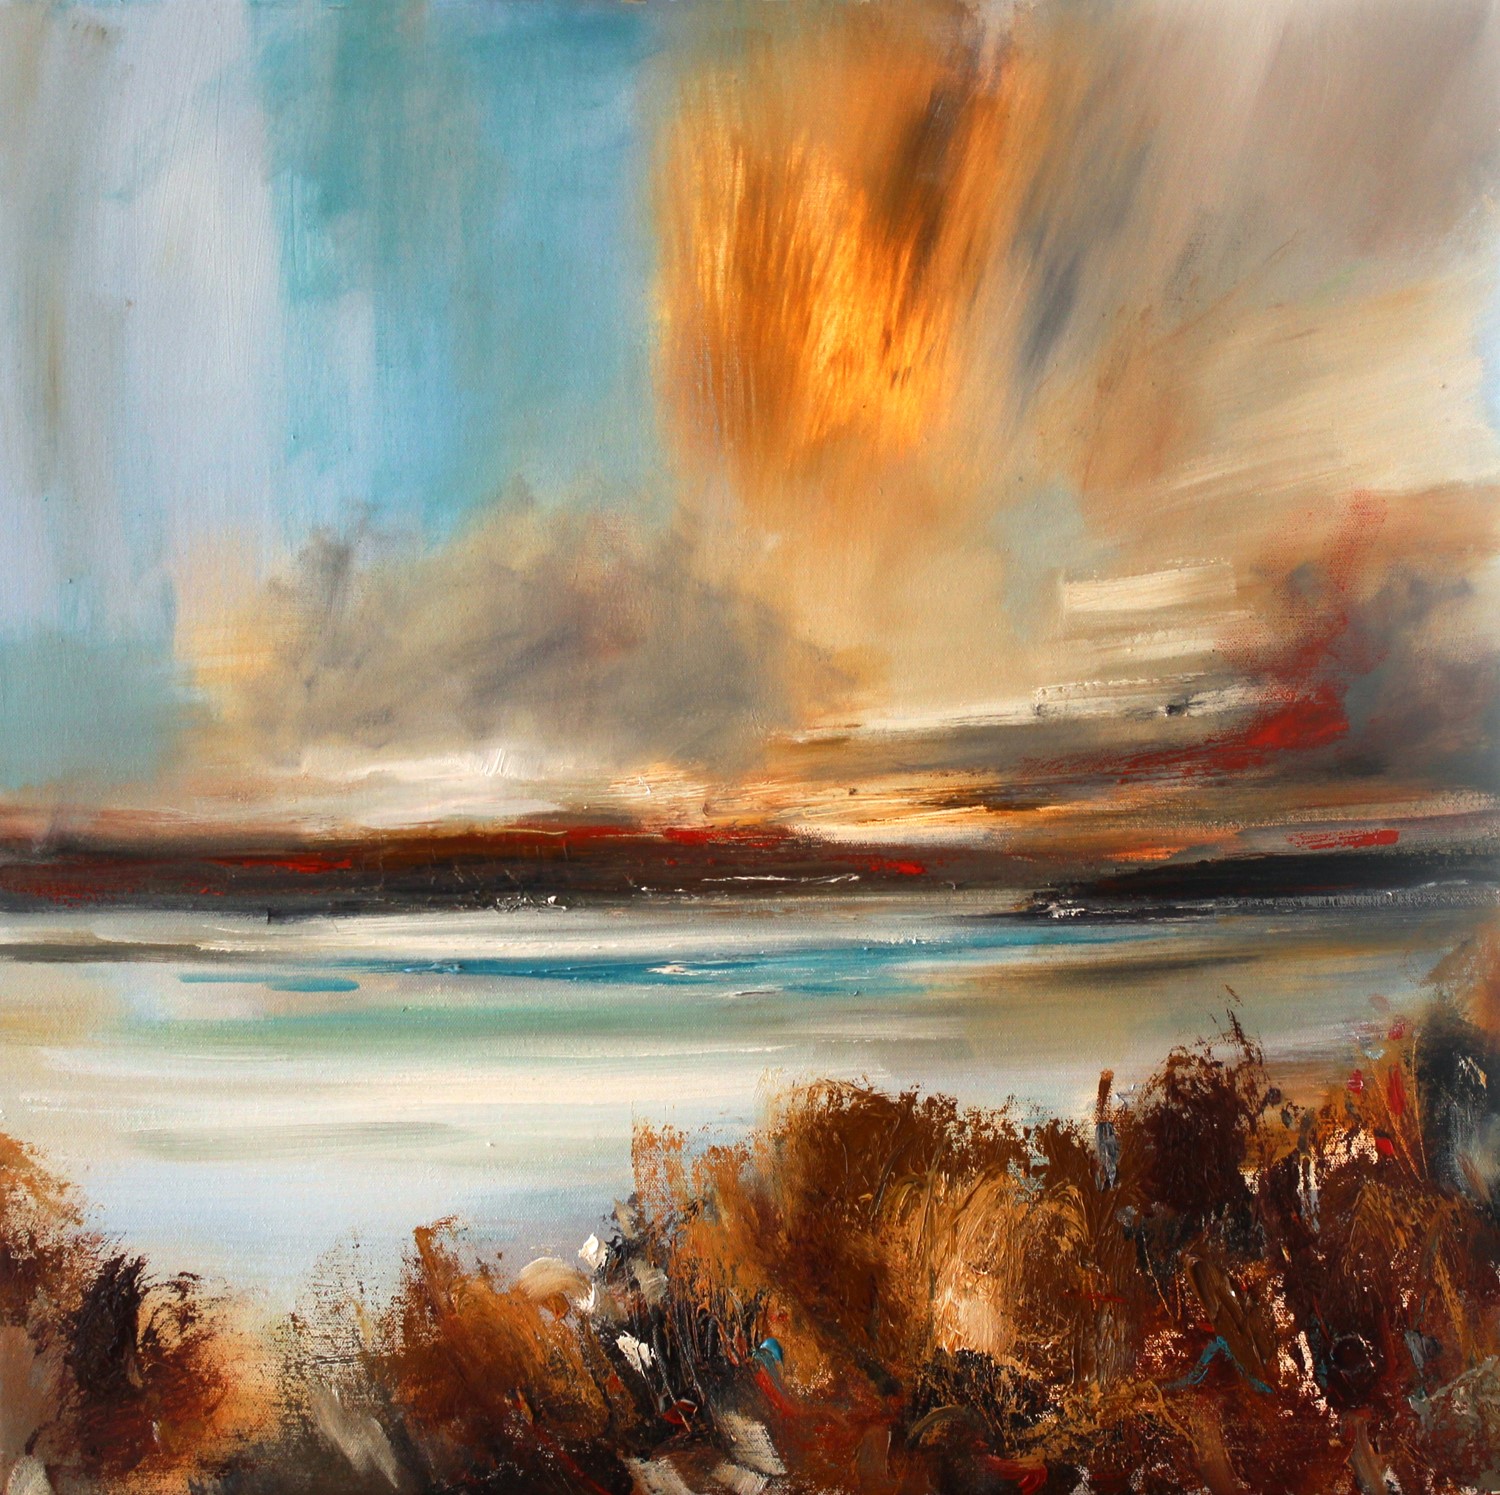 'Light on the horizon' by artist Rosanne Barr